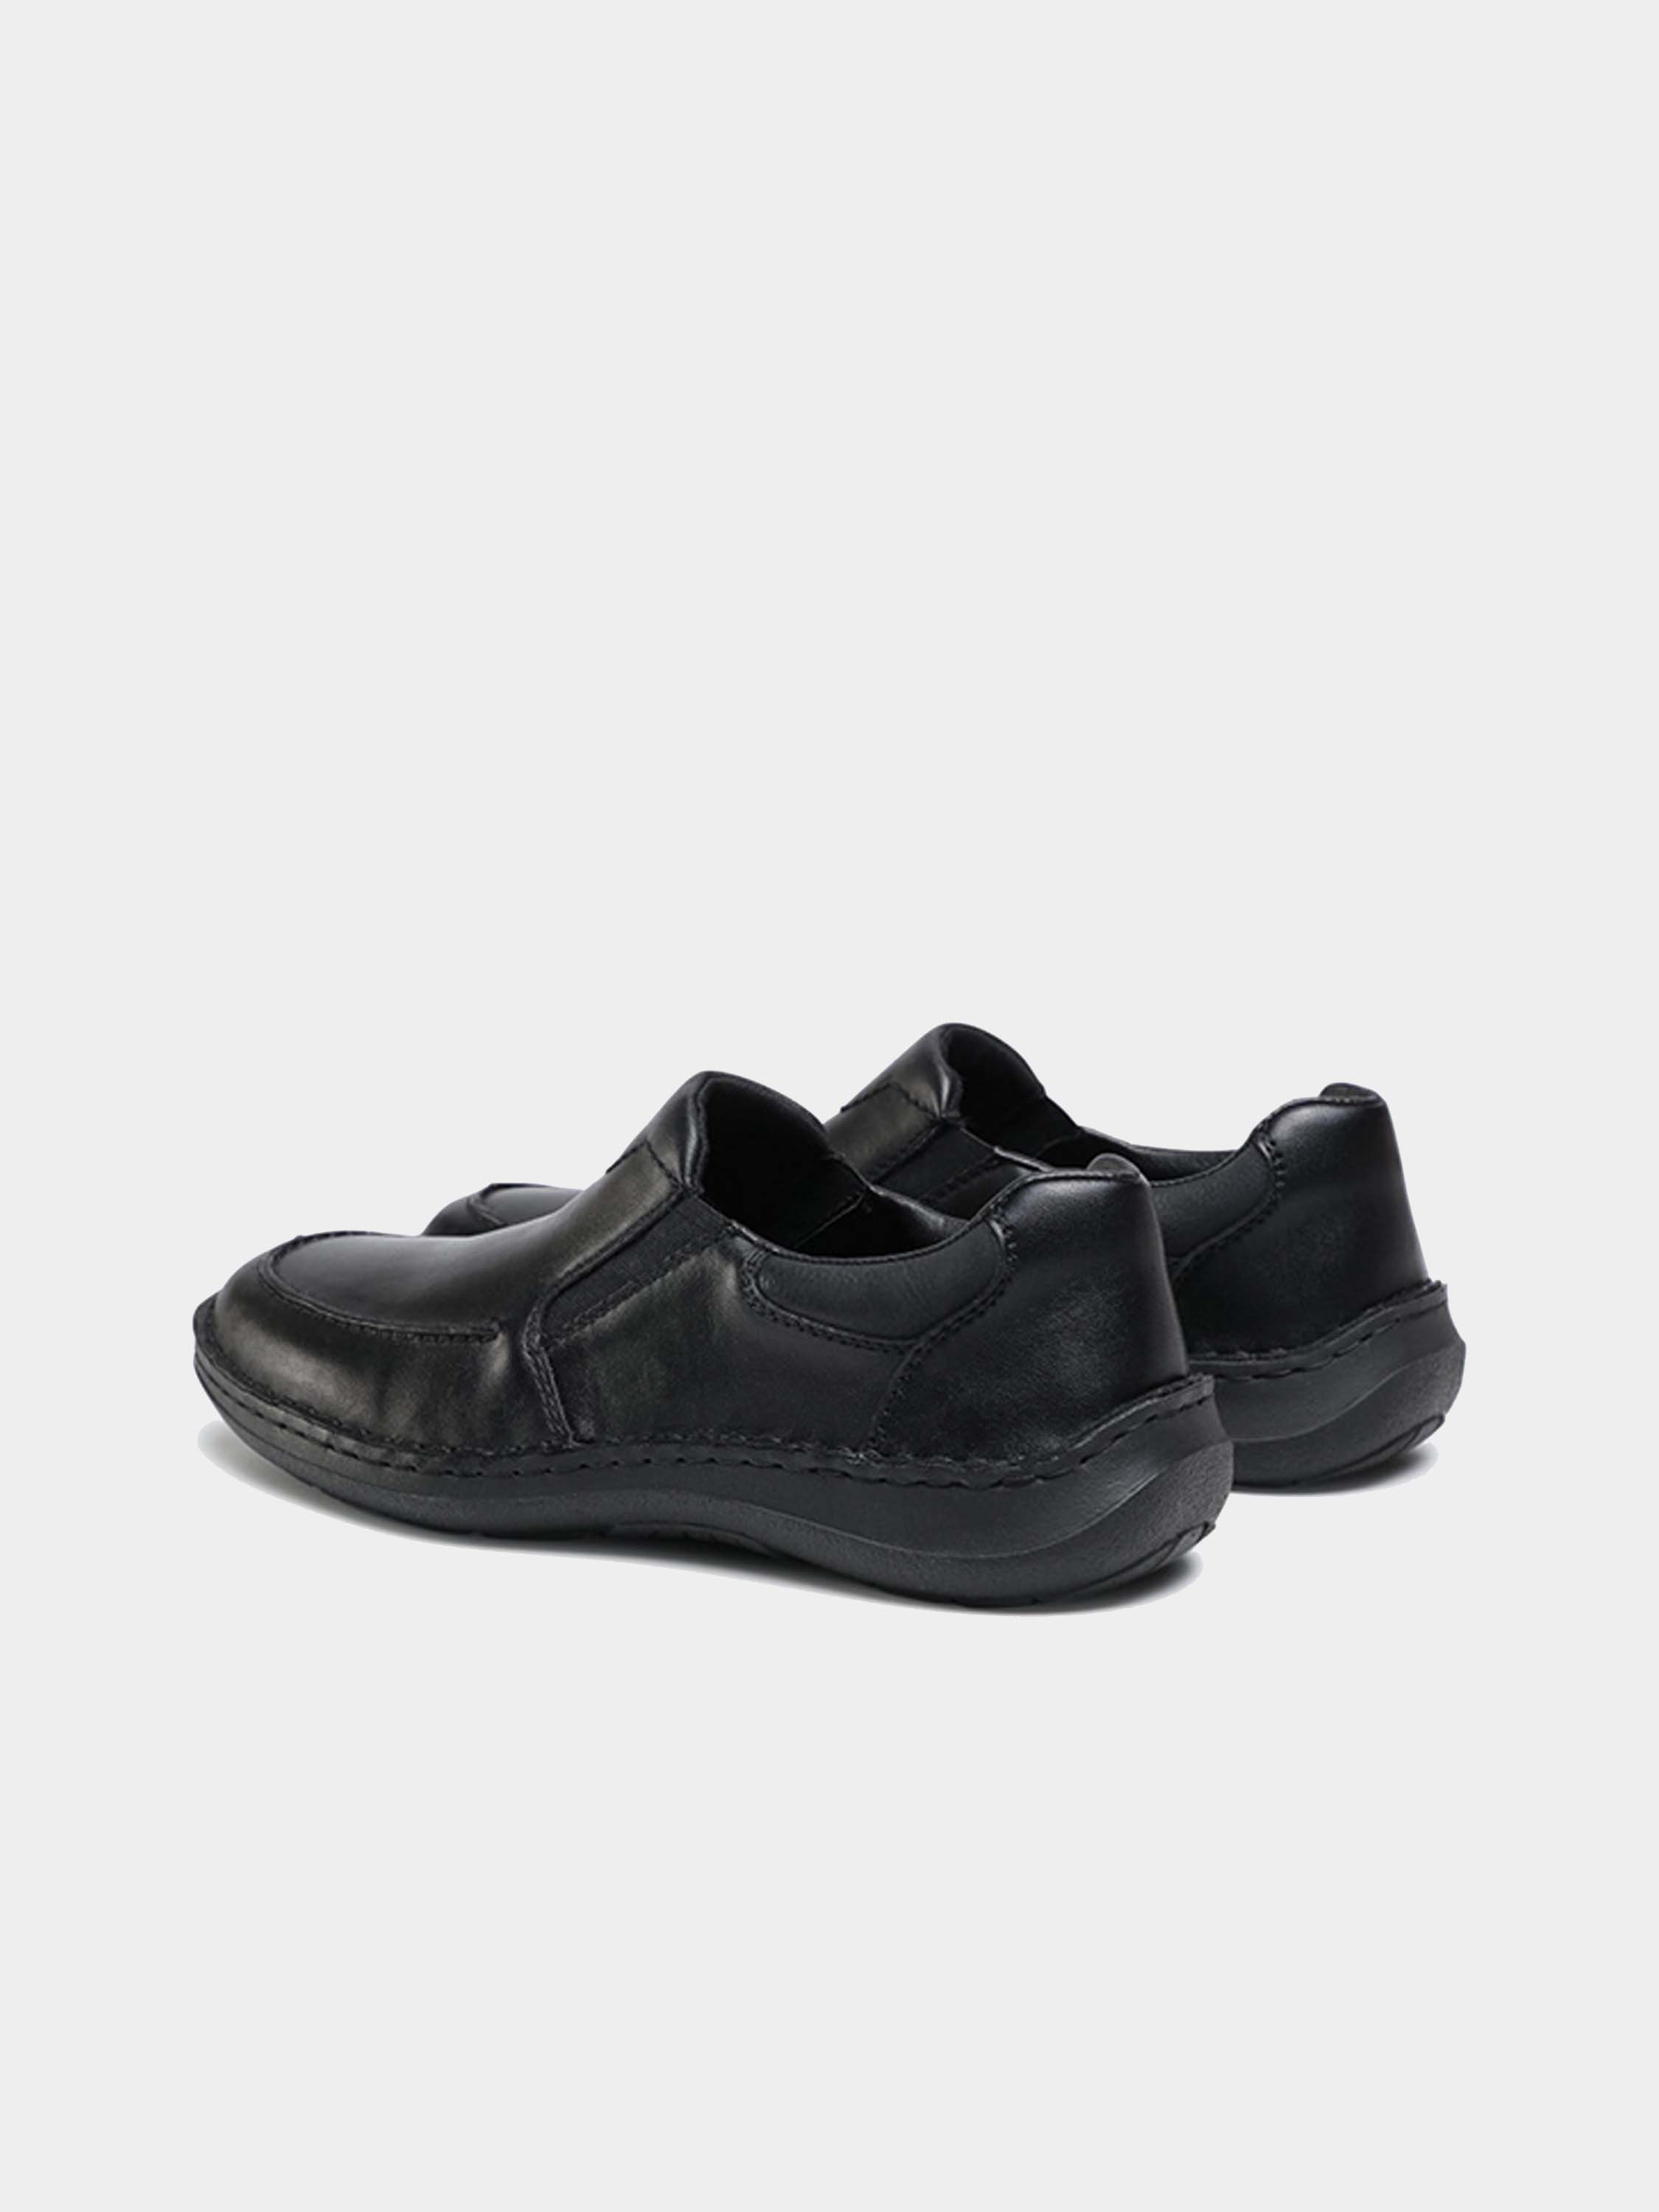 Rieker 03064 Men's Slip On Leather Shoes #color_Black